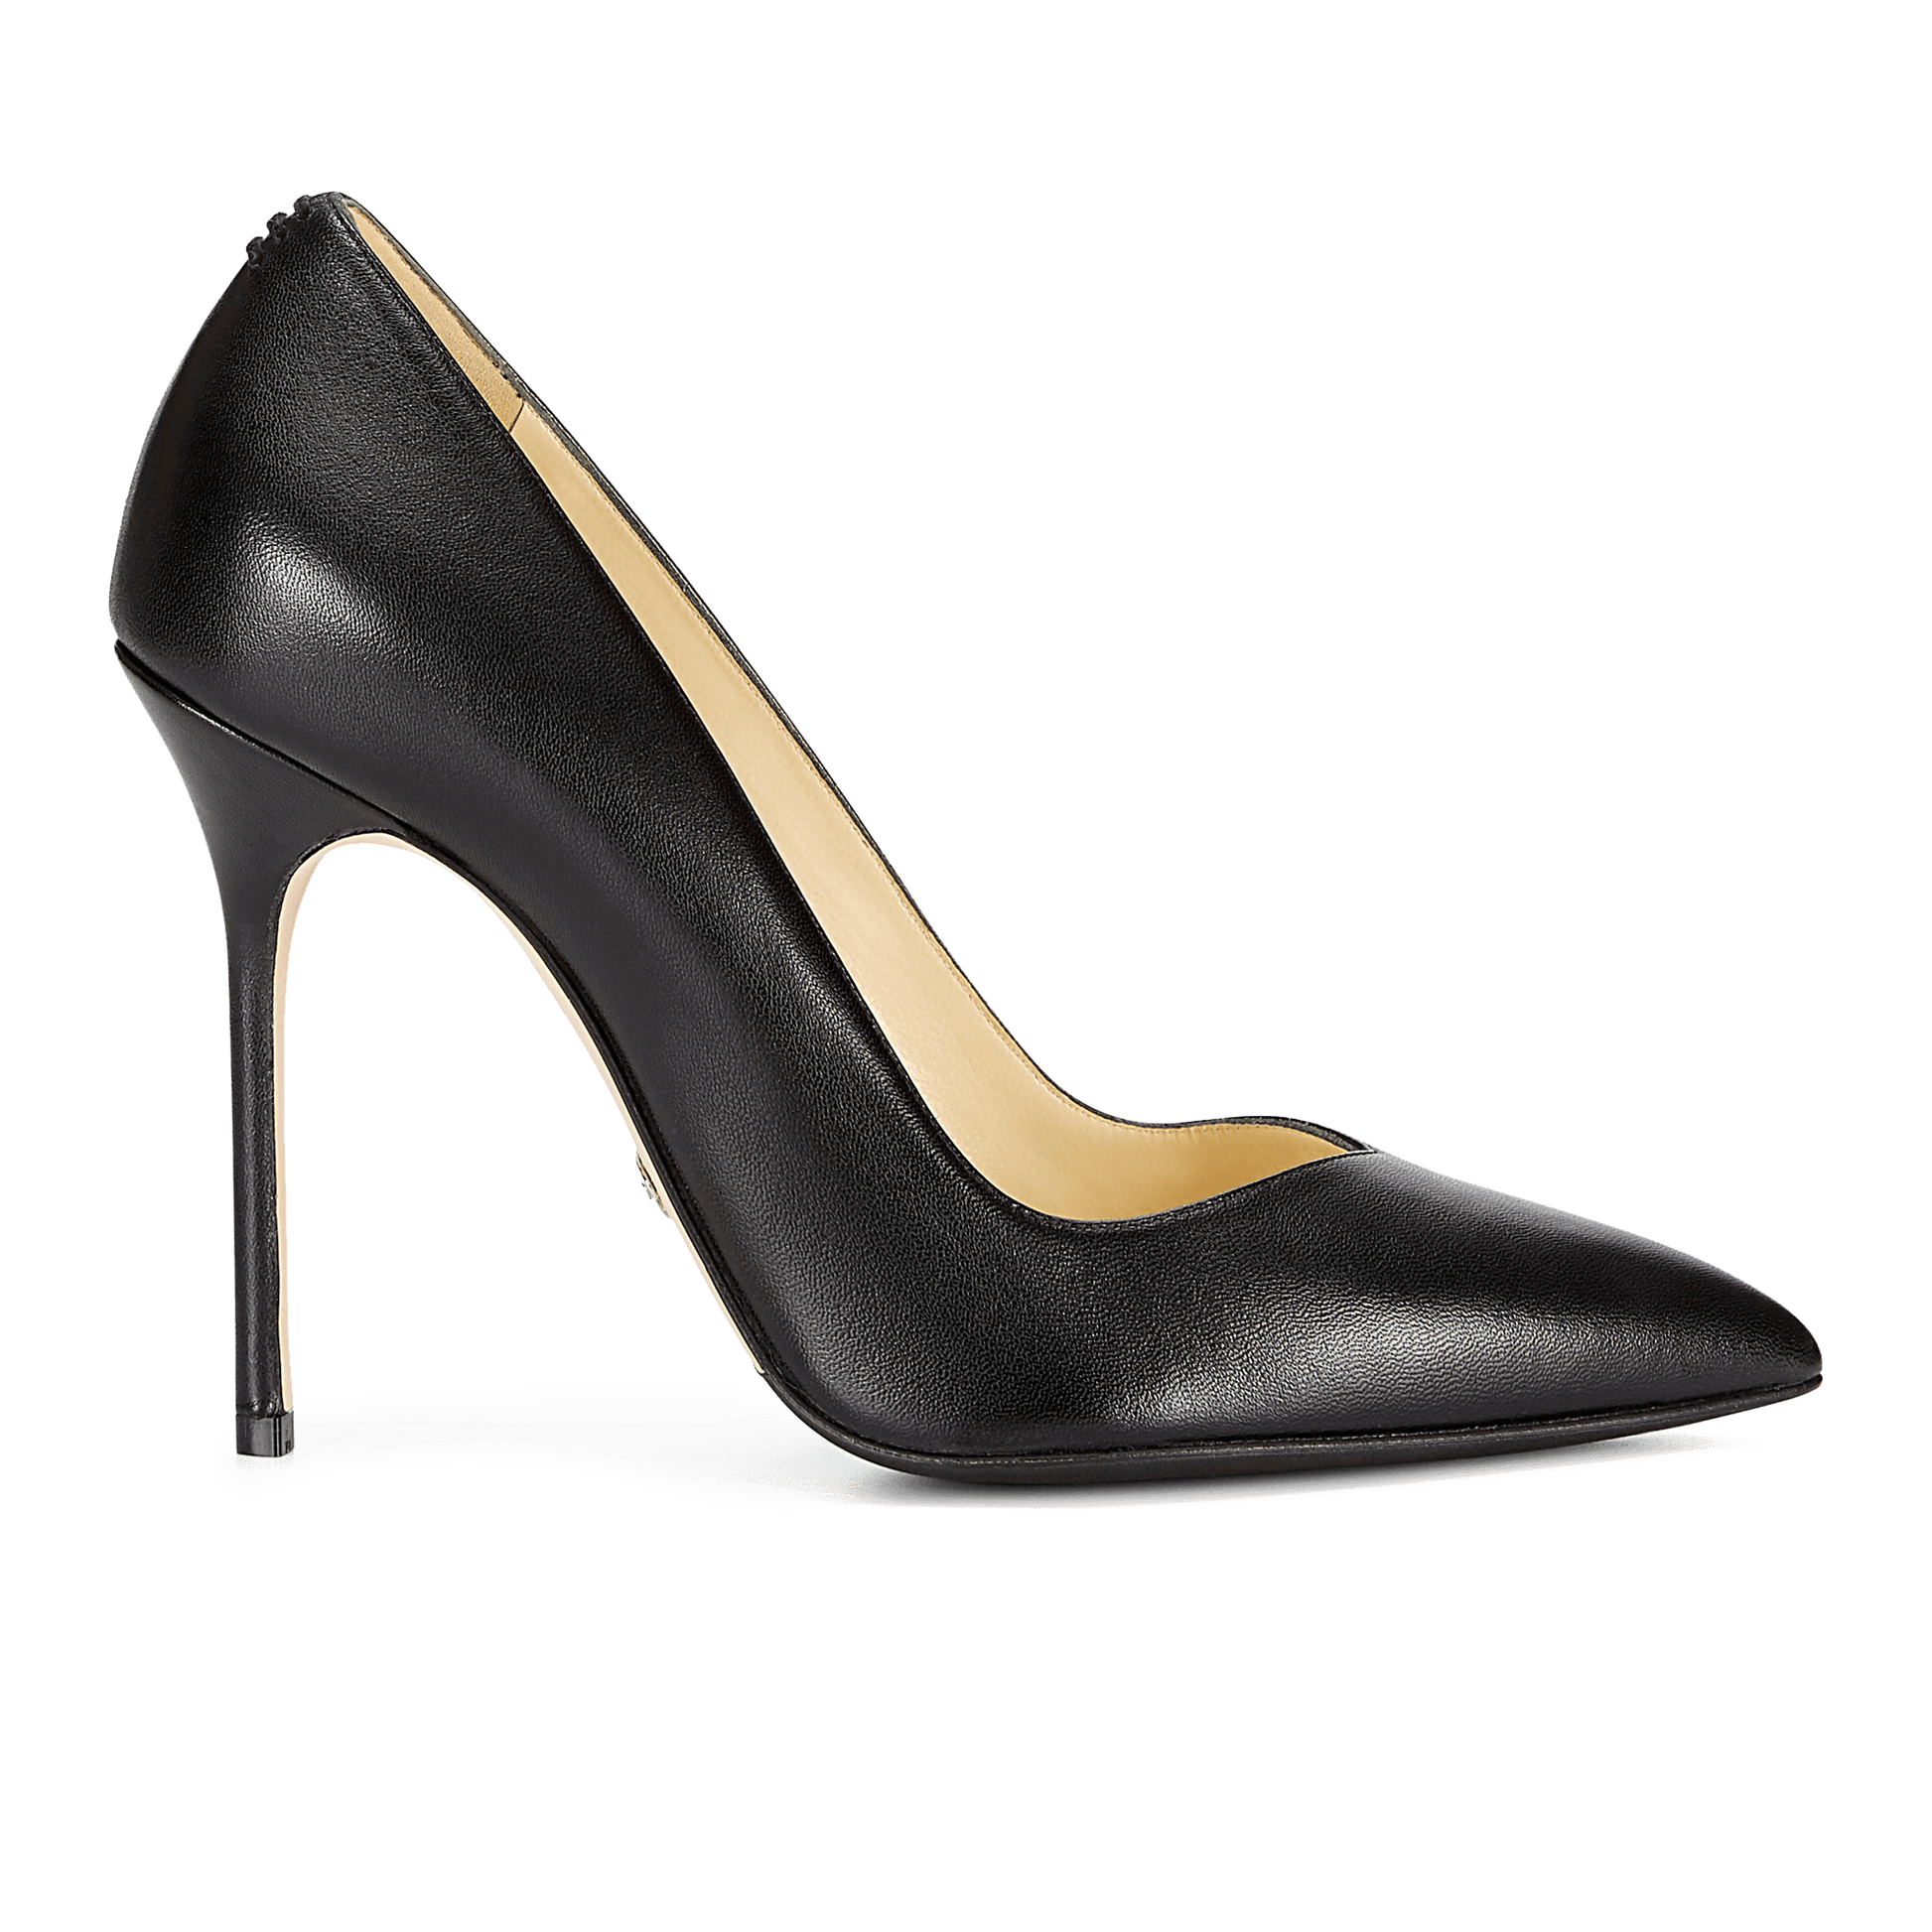 Buy MONROW Regina Leather Kitten Heels for Women, Black, 3-UK | Fancy & Stylish  Heel sandals, Casual, Comfortable Fashion Heel Sandal at Amazon.in